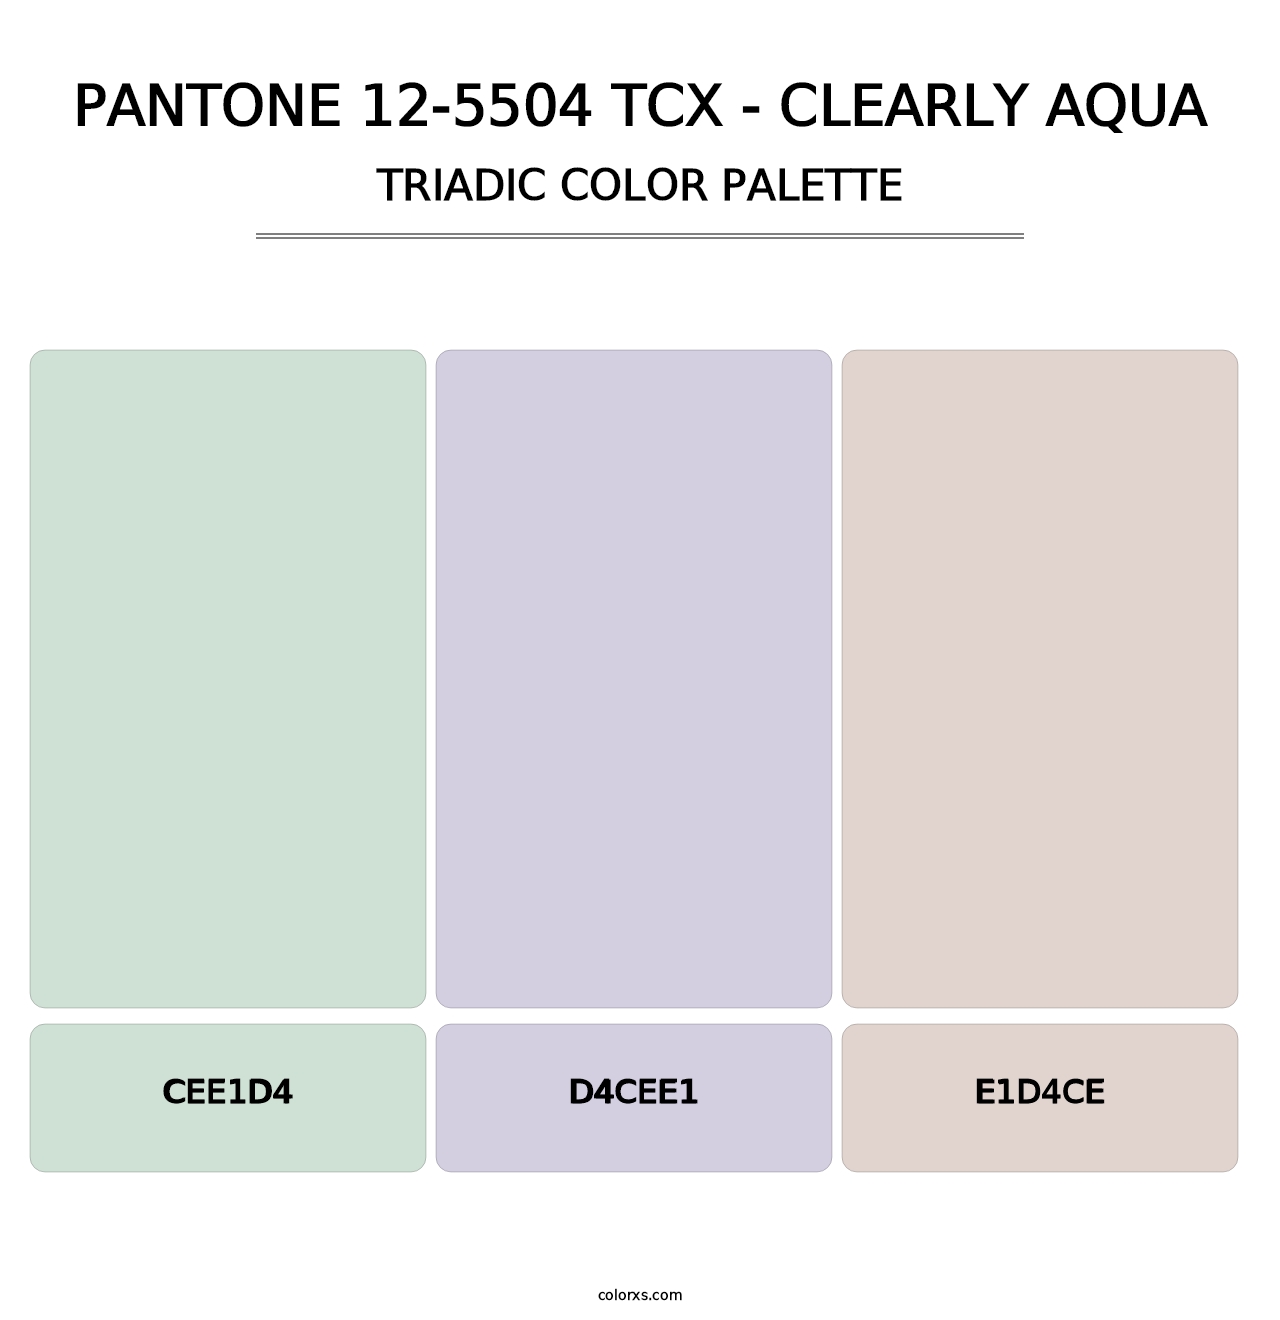 PANTONE 12-5504 TCX - Clearly Aqua - Triadic Color Palette